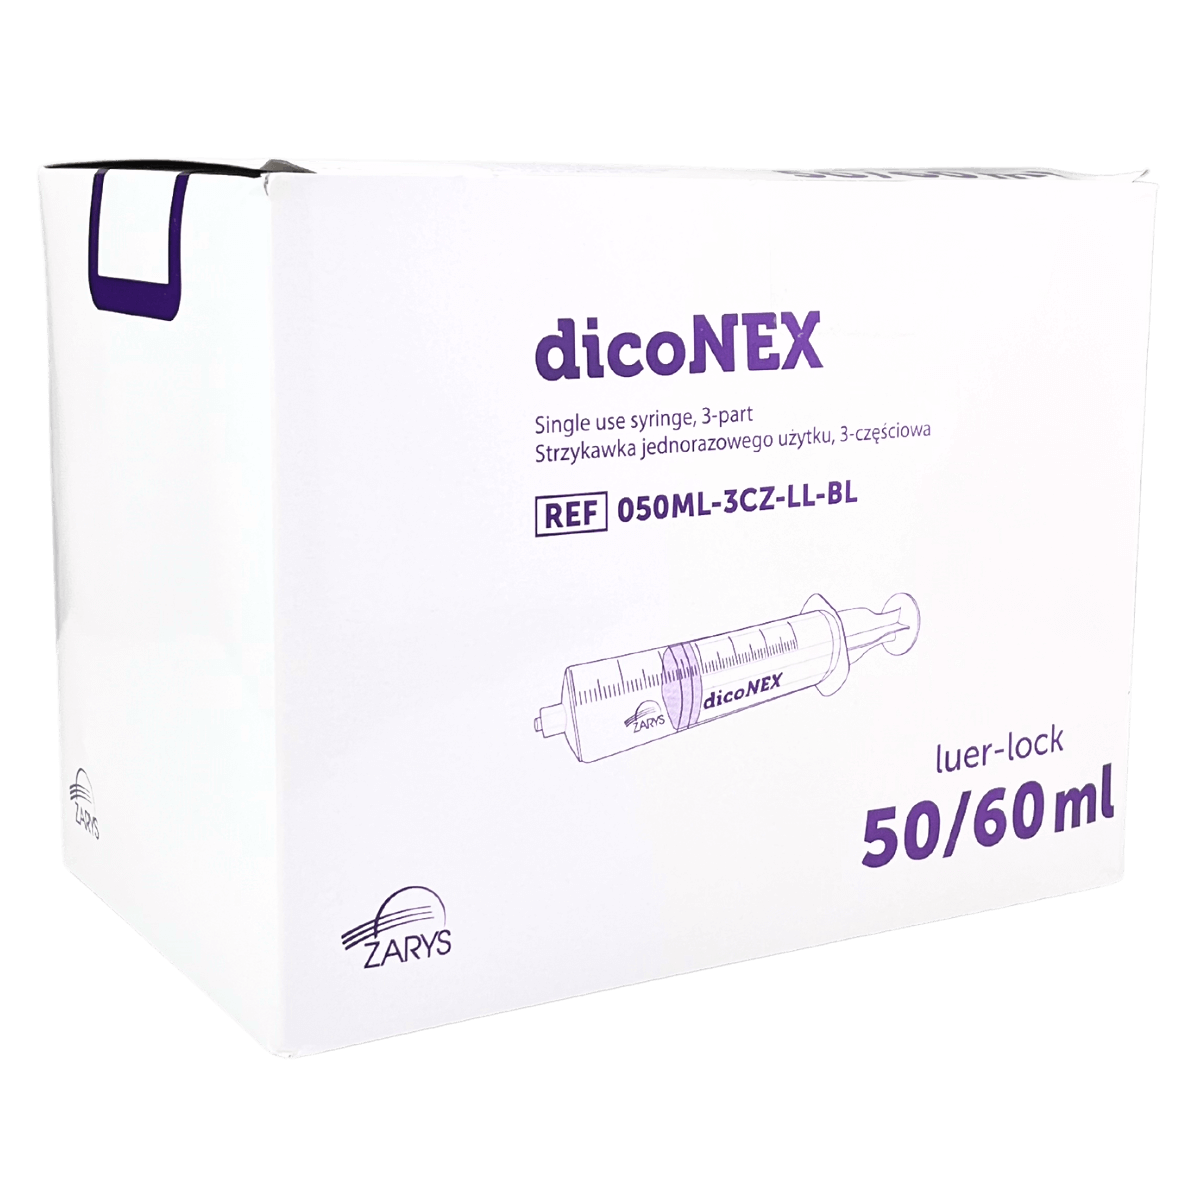 Diconex luer-lock 50ml.png